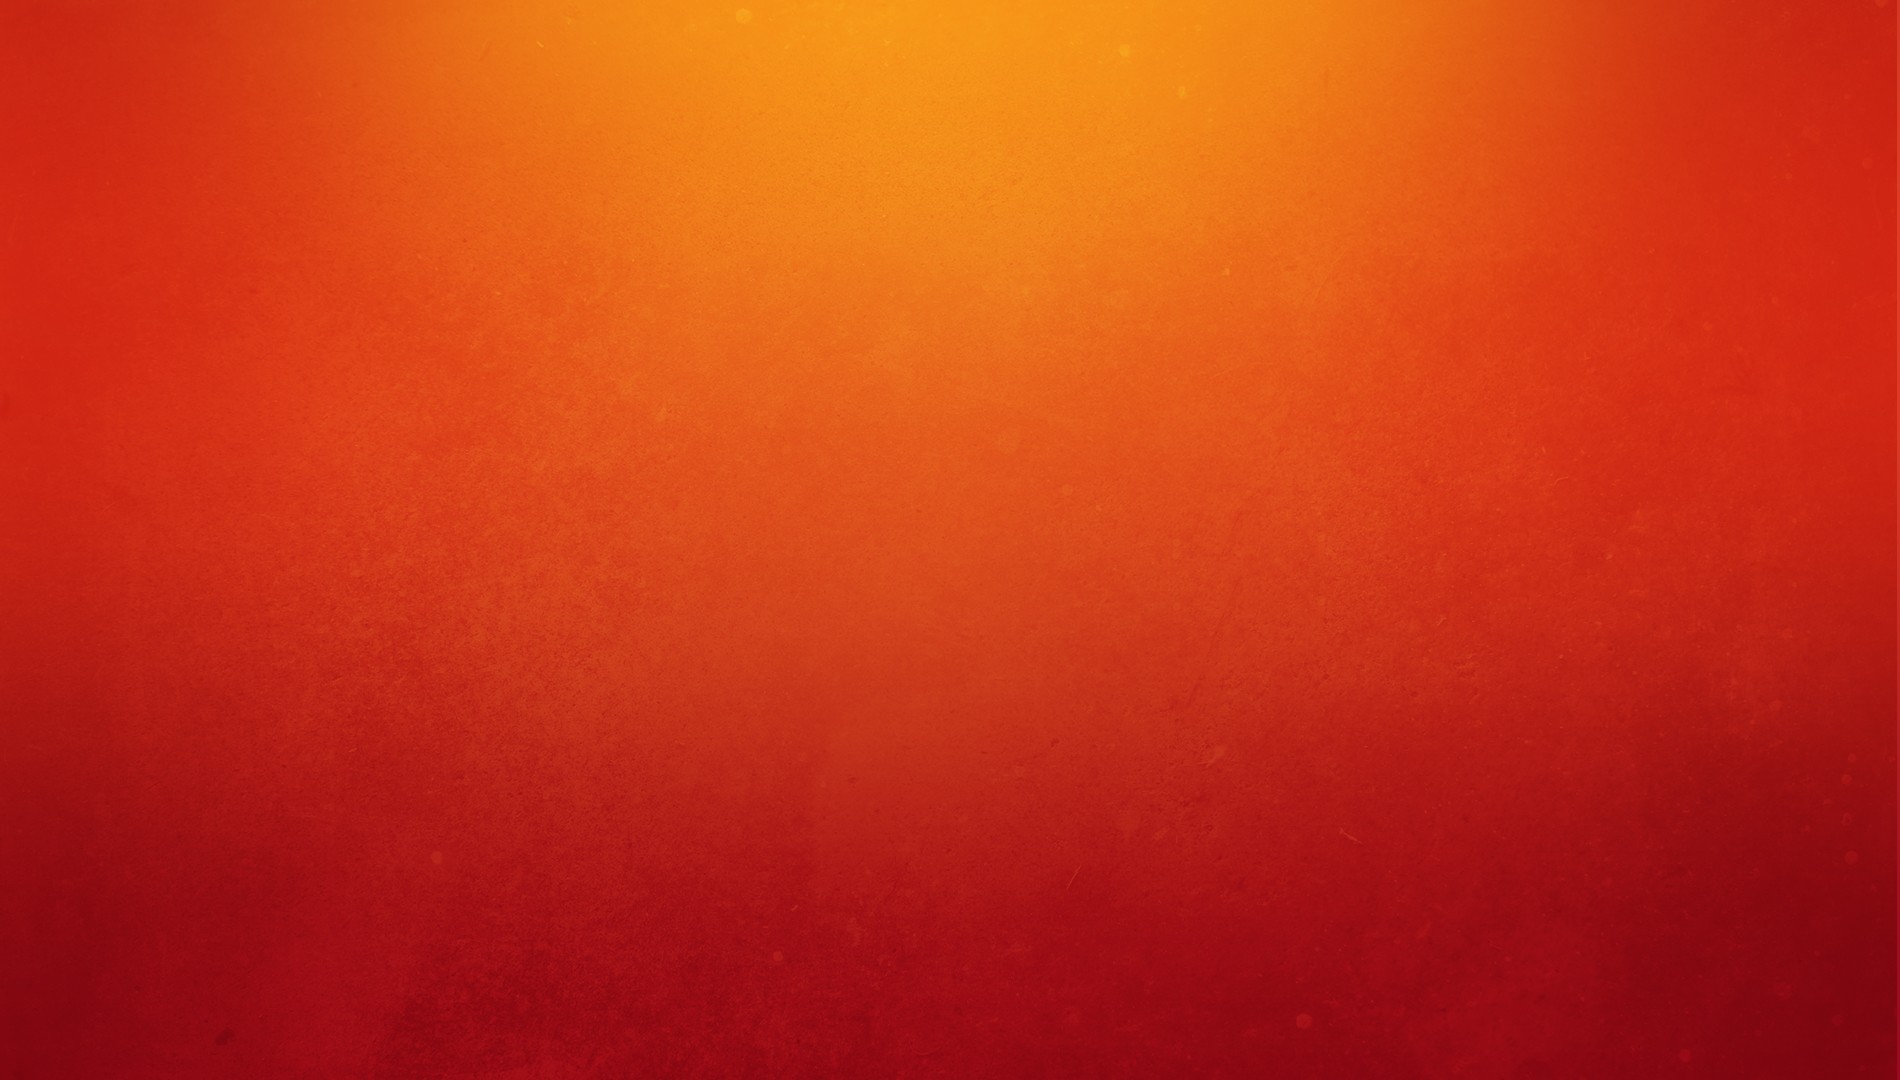 General 1900x1080 gradient orange red digital art artwork minimalism